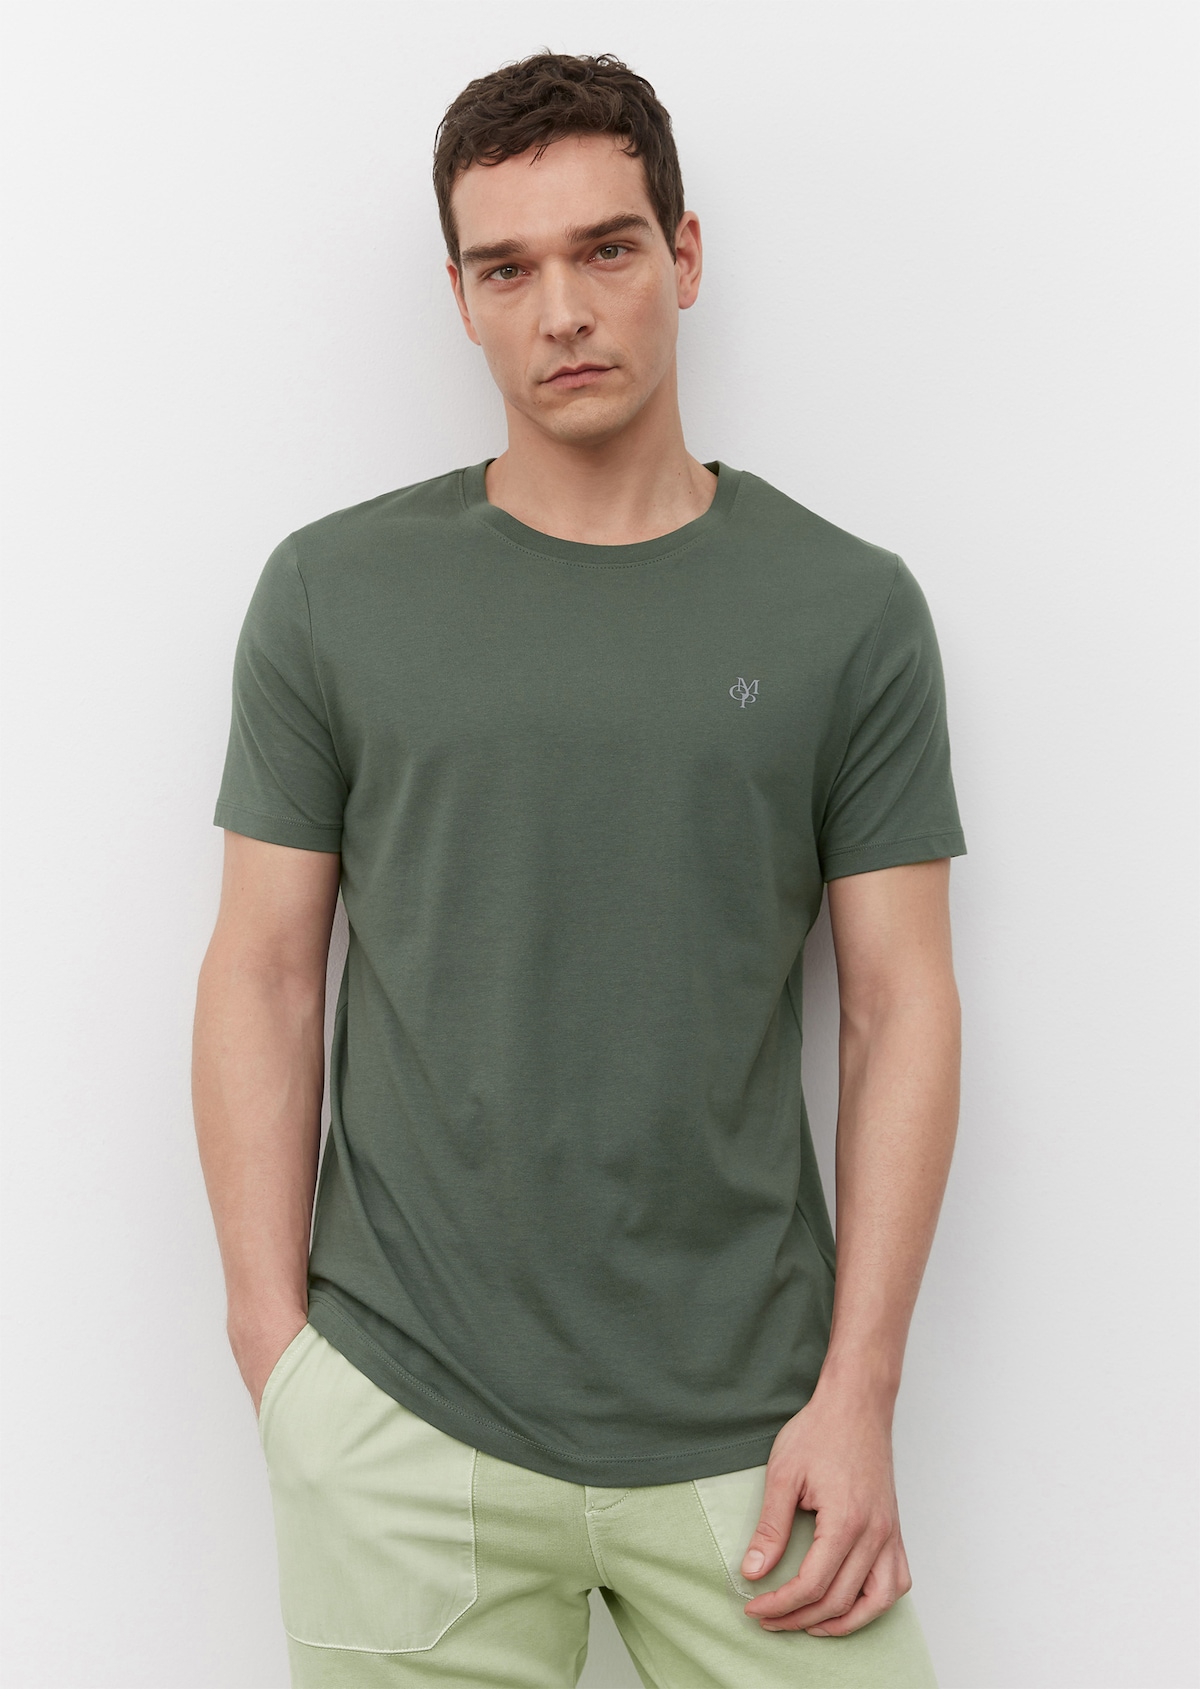 Rundhals-T-Shirt regular aus reinem Organic Cotton - grün | Bekleidung |  MARC O\'POLO